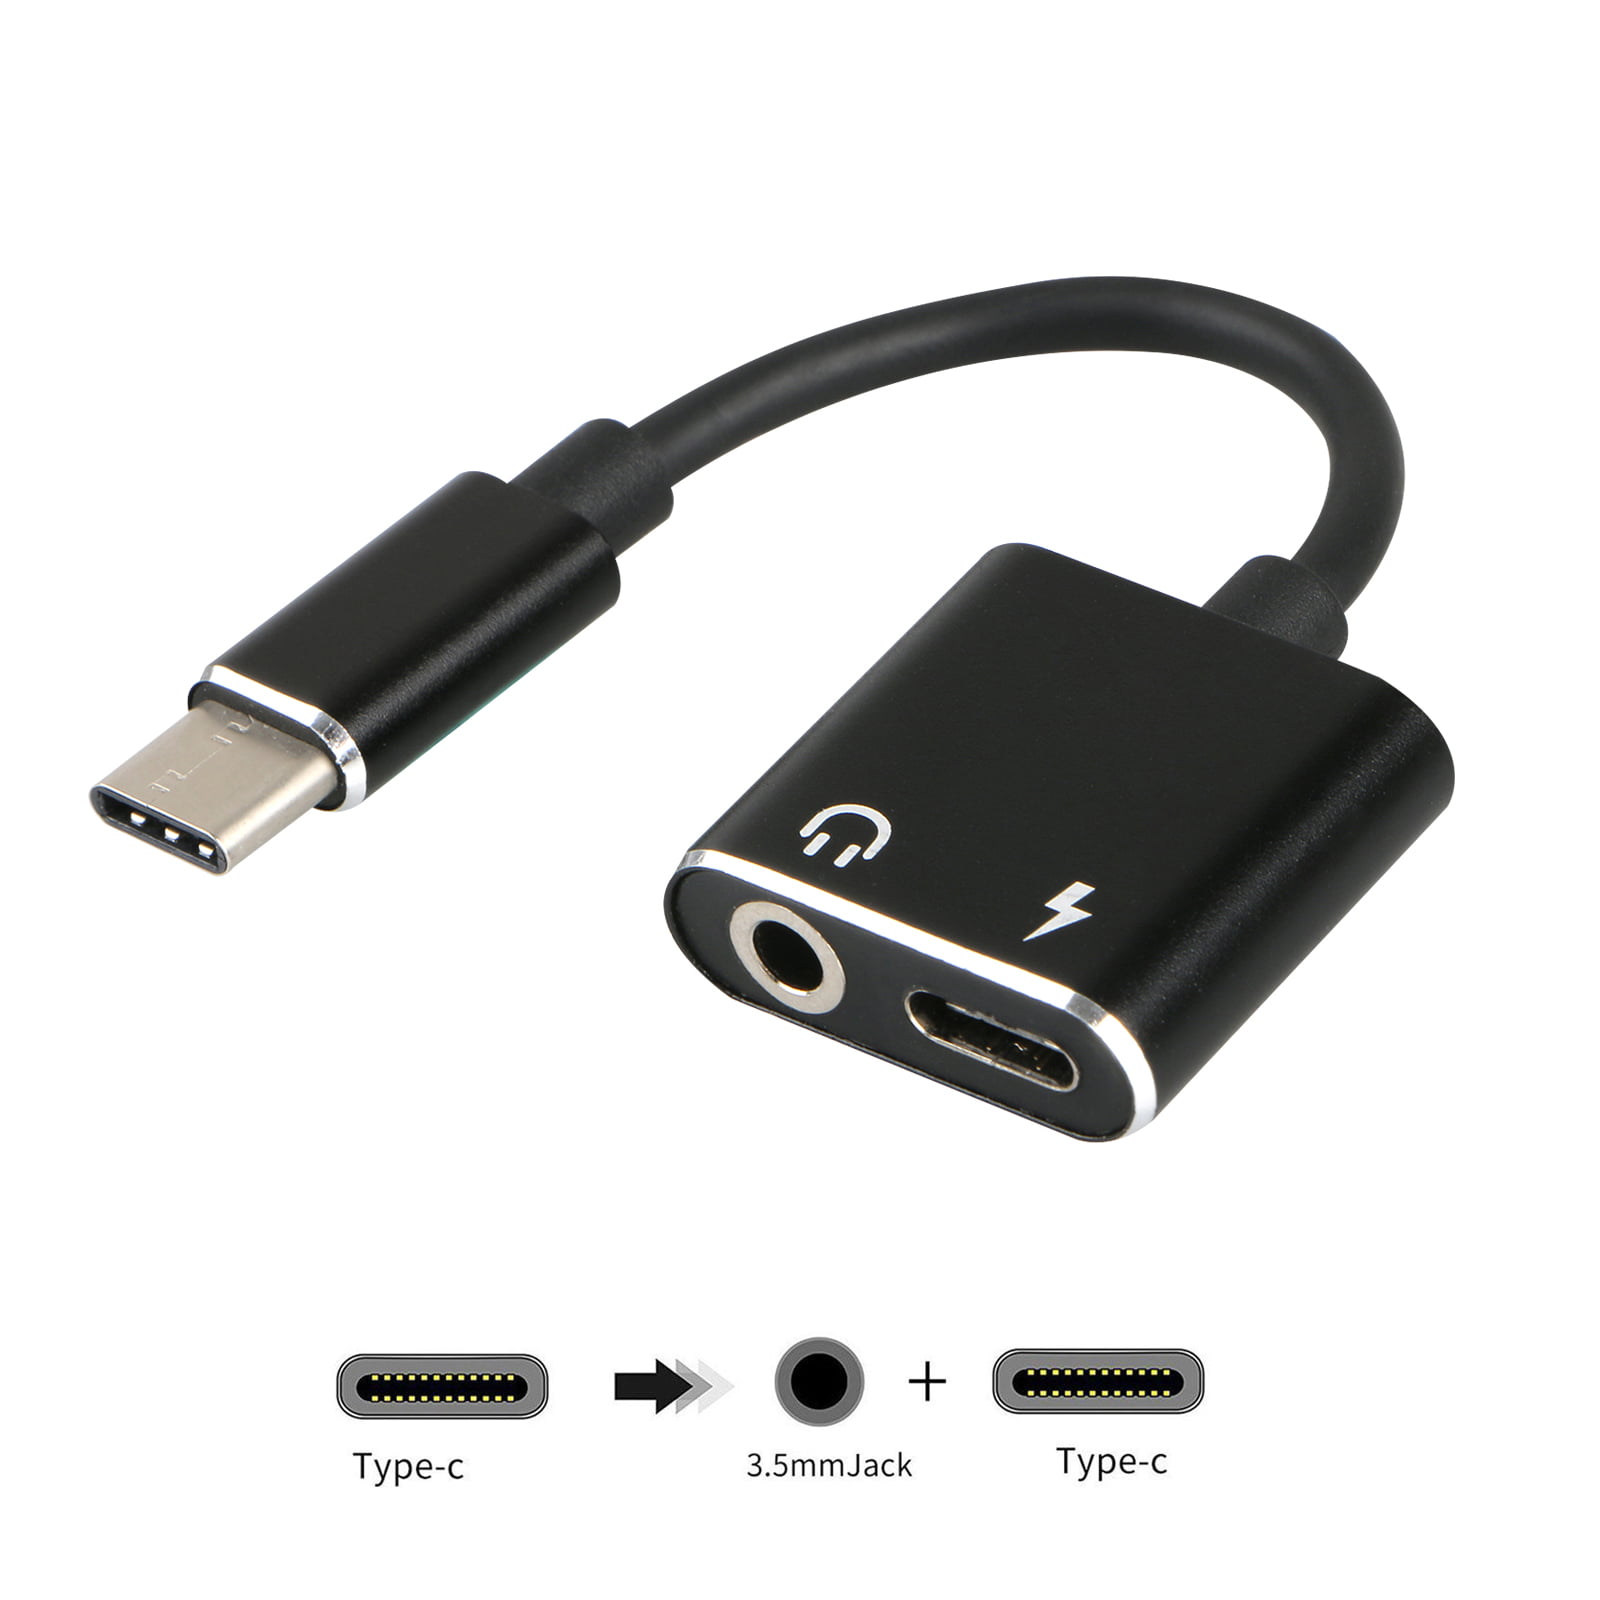 USB C Type C to 3.5mm Adapter Aux Audio Headphone Jack Type C to 3.5mm Audio Adapter for 2019 Pad Pro//Google Pixel 2//2XL//3//3XL Essentia Samsung S9 Note 9//HTC U11//Moto Z etc